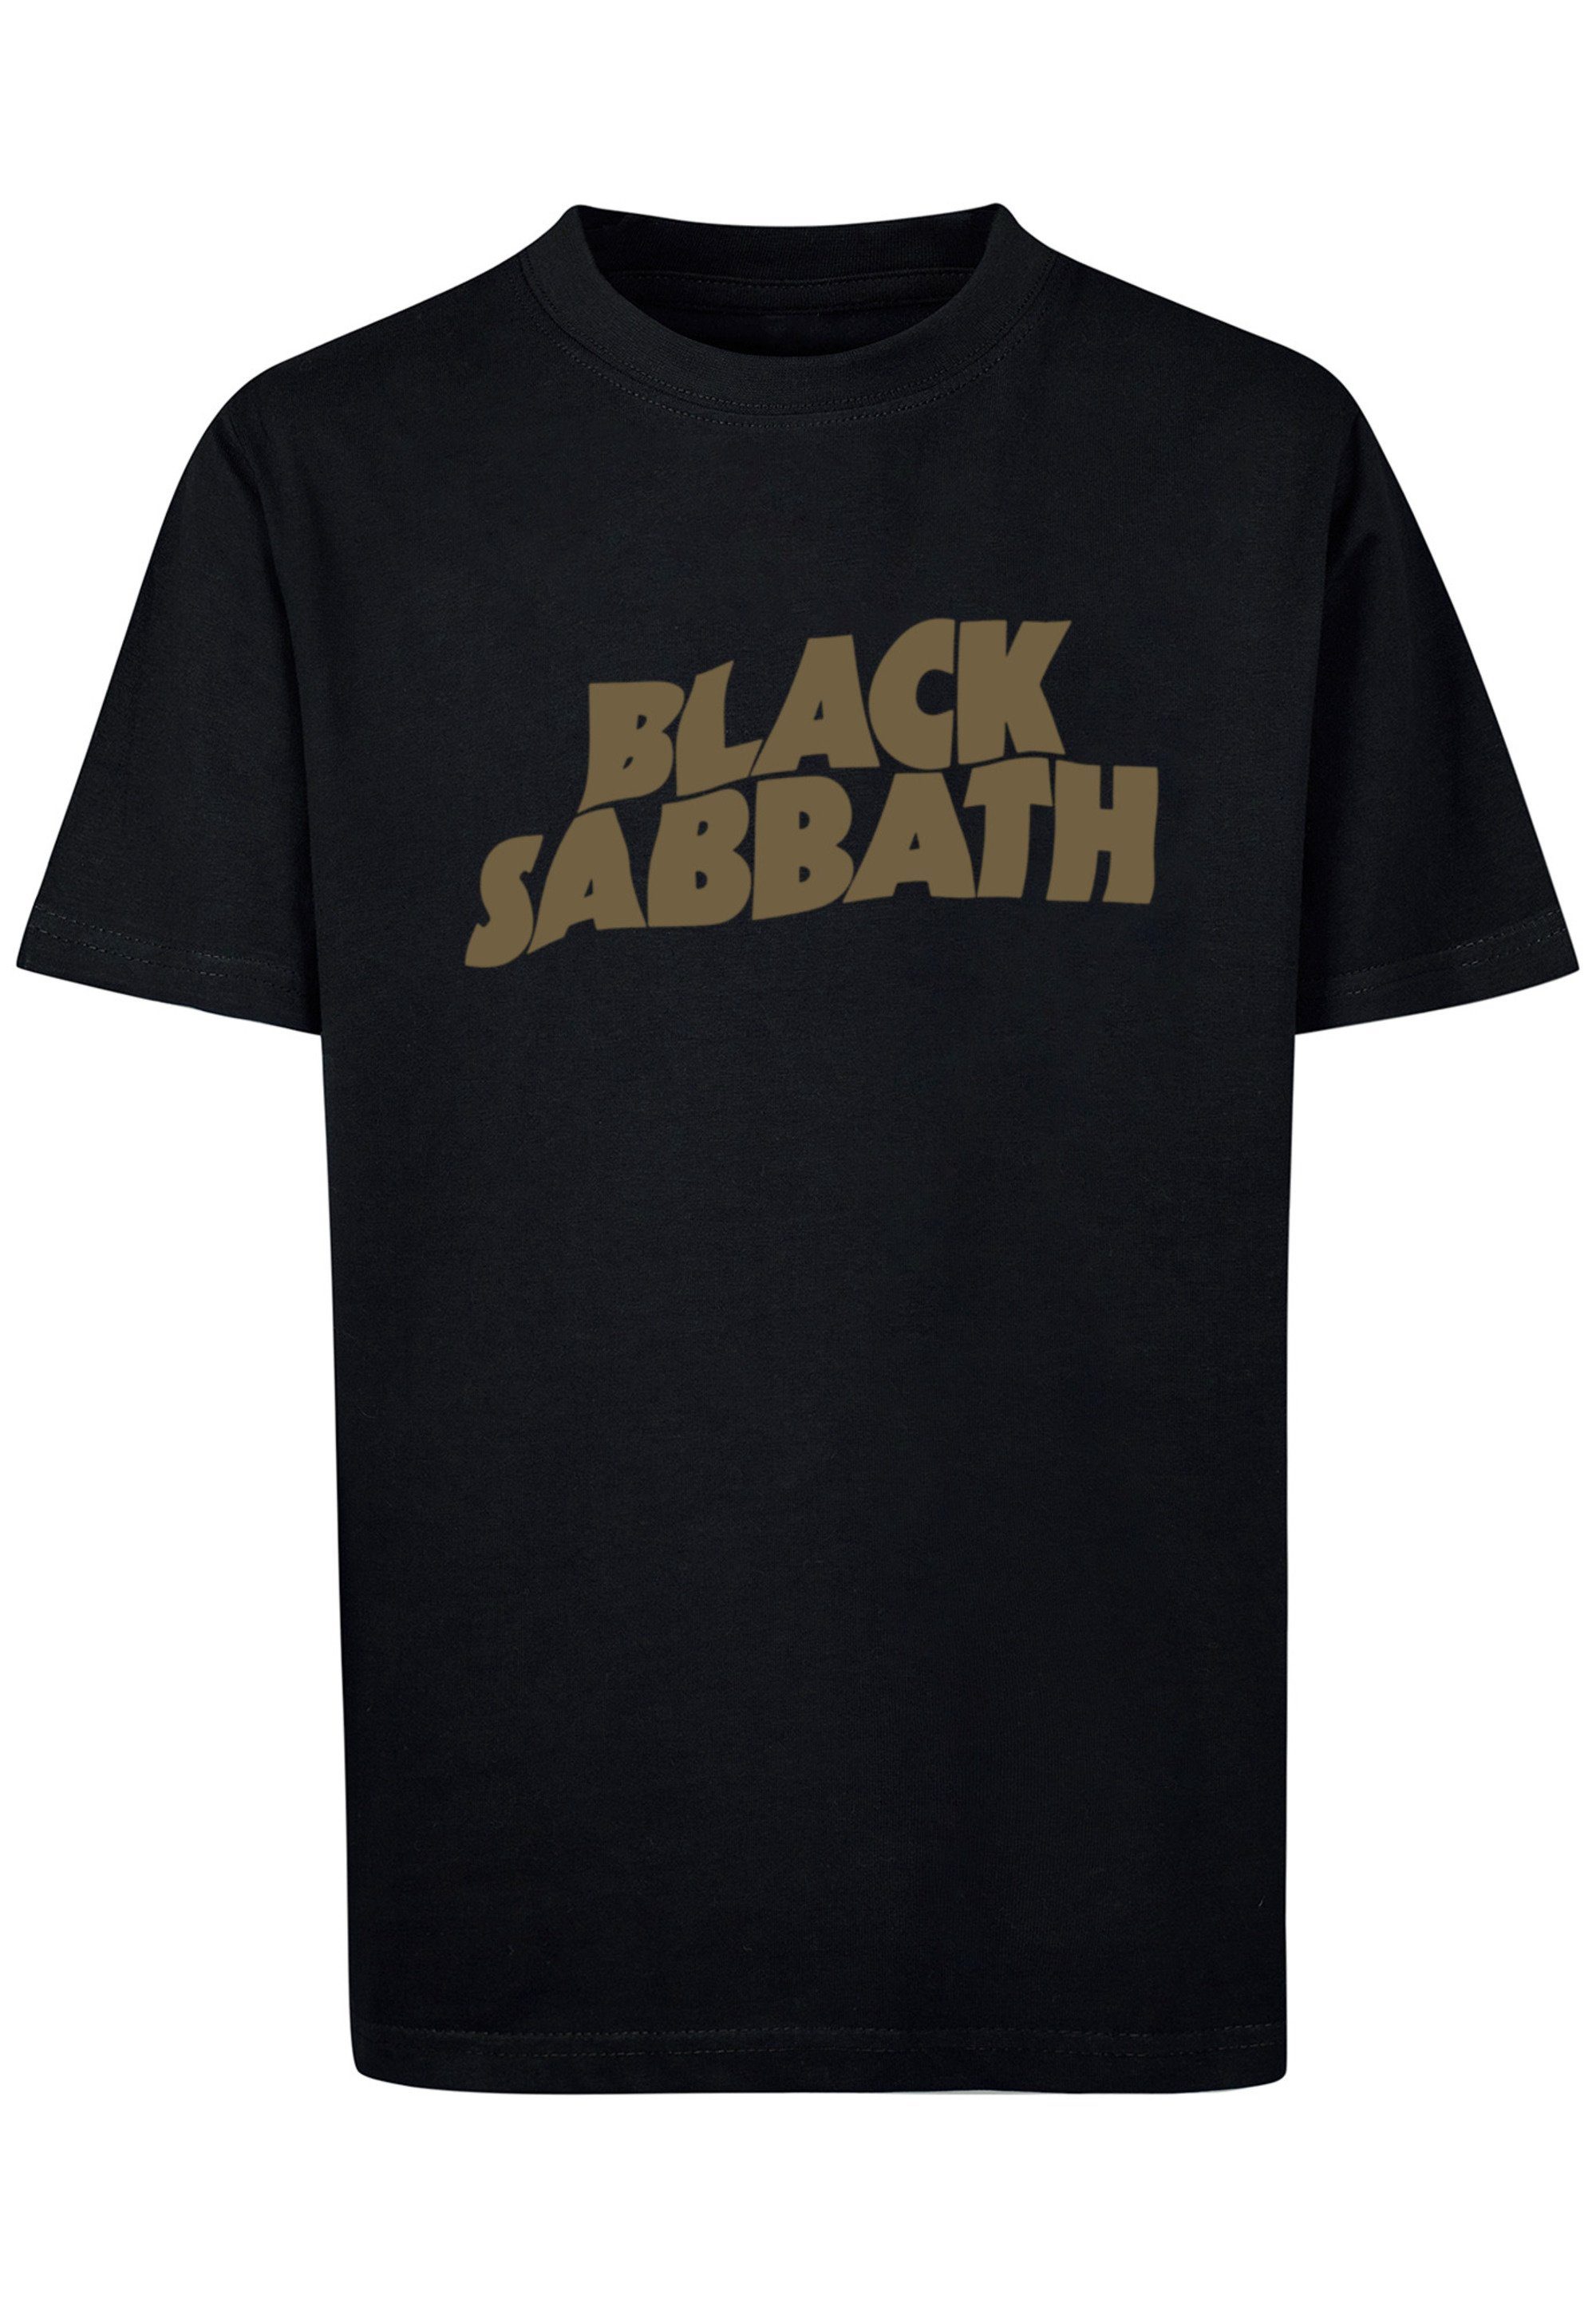 Print F4NT4STIC Band US Sabbath T-Shirt Zip Black Black Metal Tour 1978